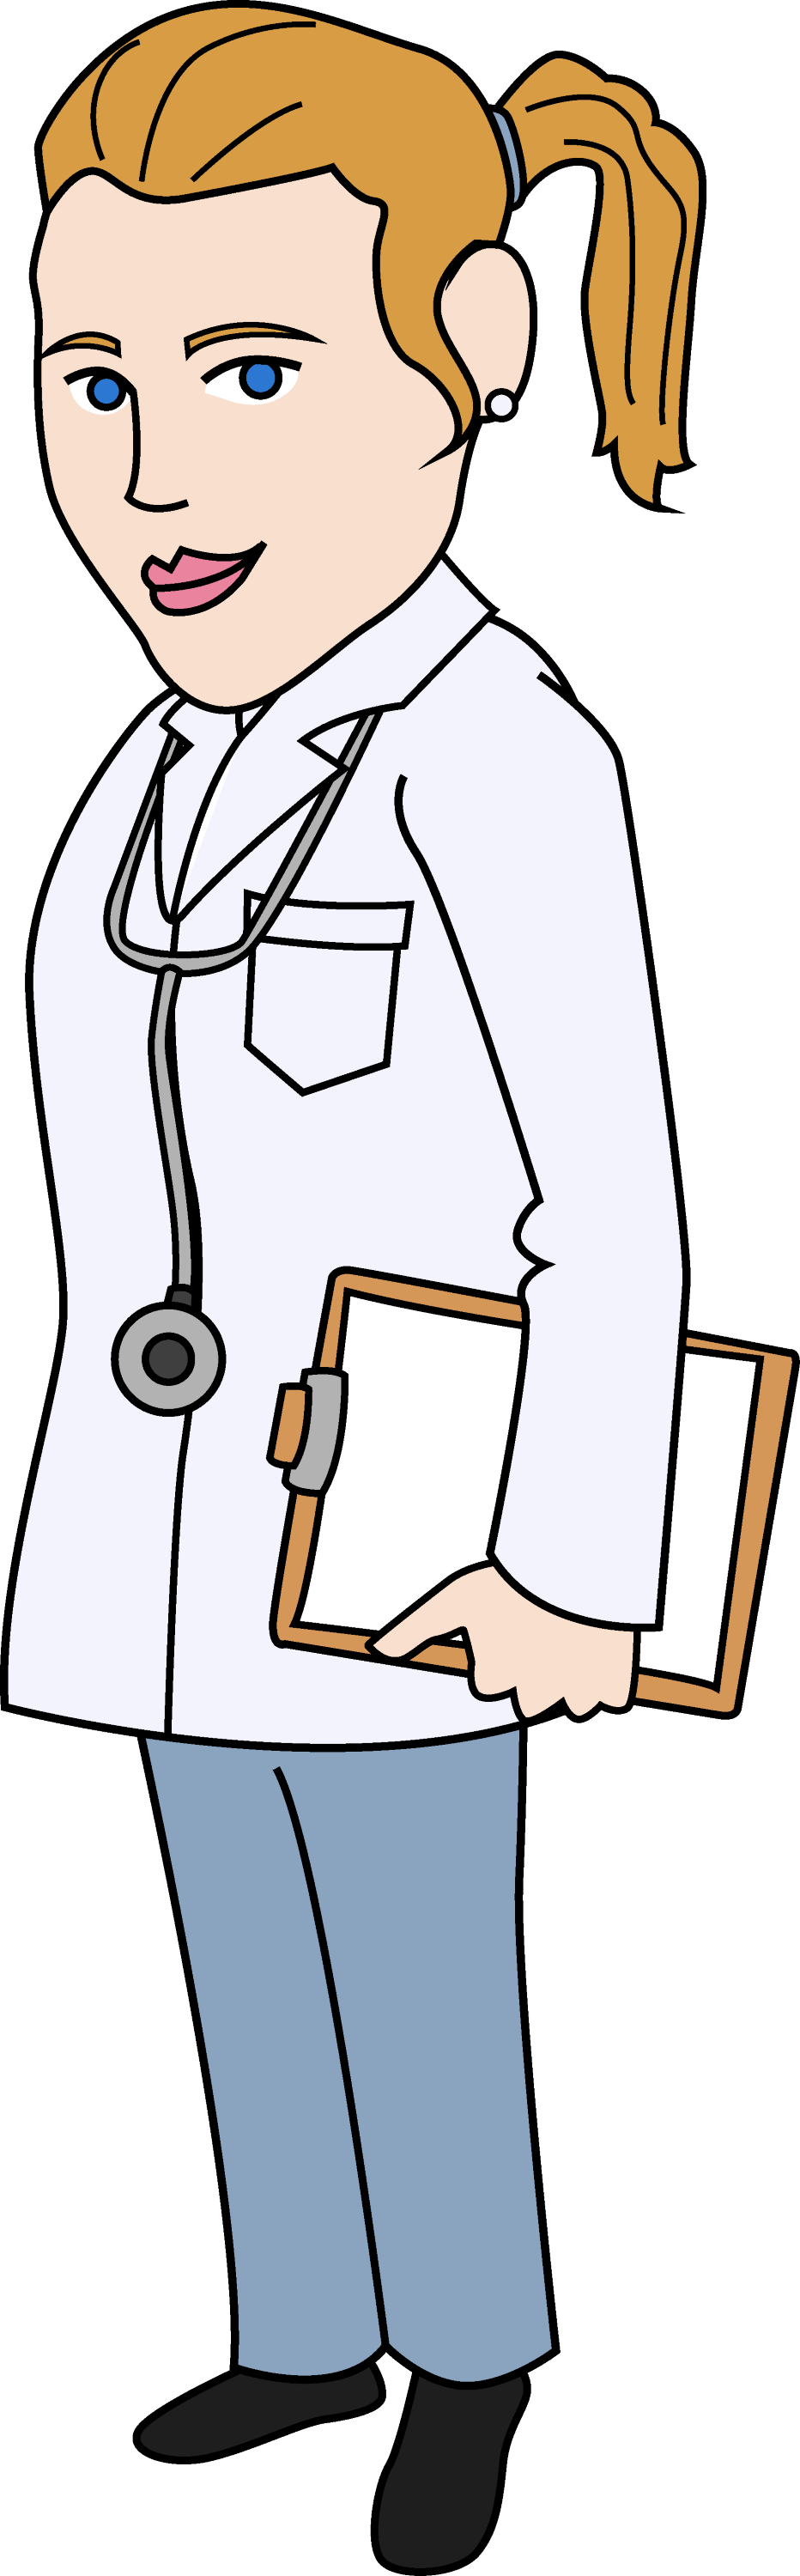 free clipart doctor cartoon - photo #14